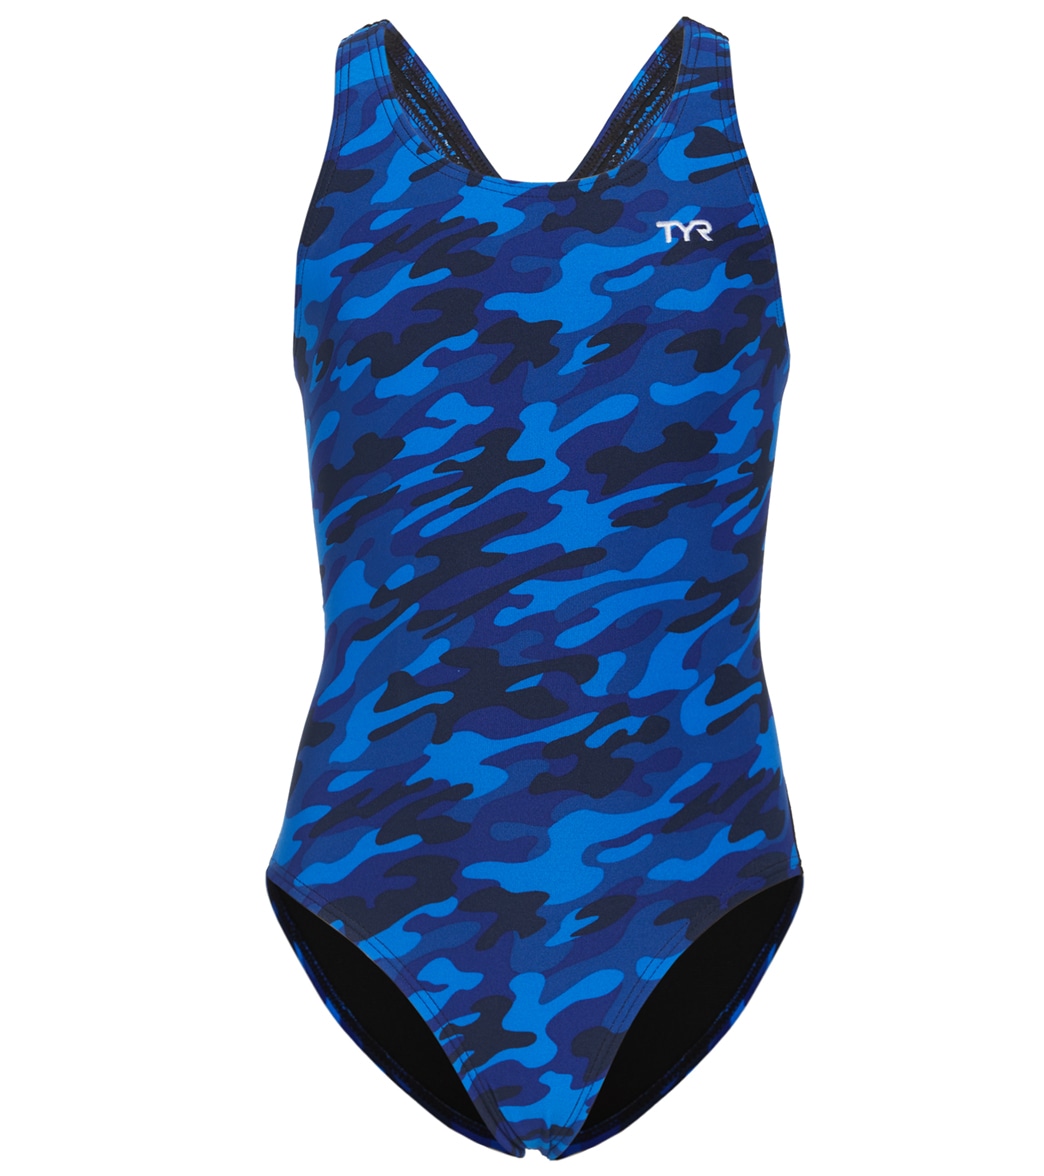 TYR Girls' Camo Maxfit One Piece Swimsuit - Blue 24 - Swimoutlet.com